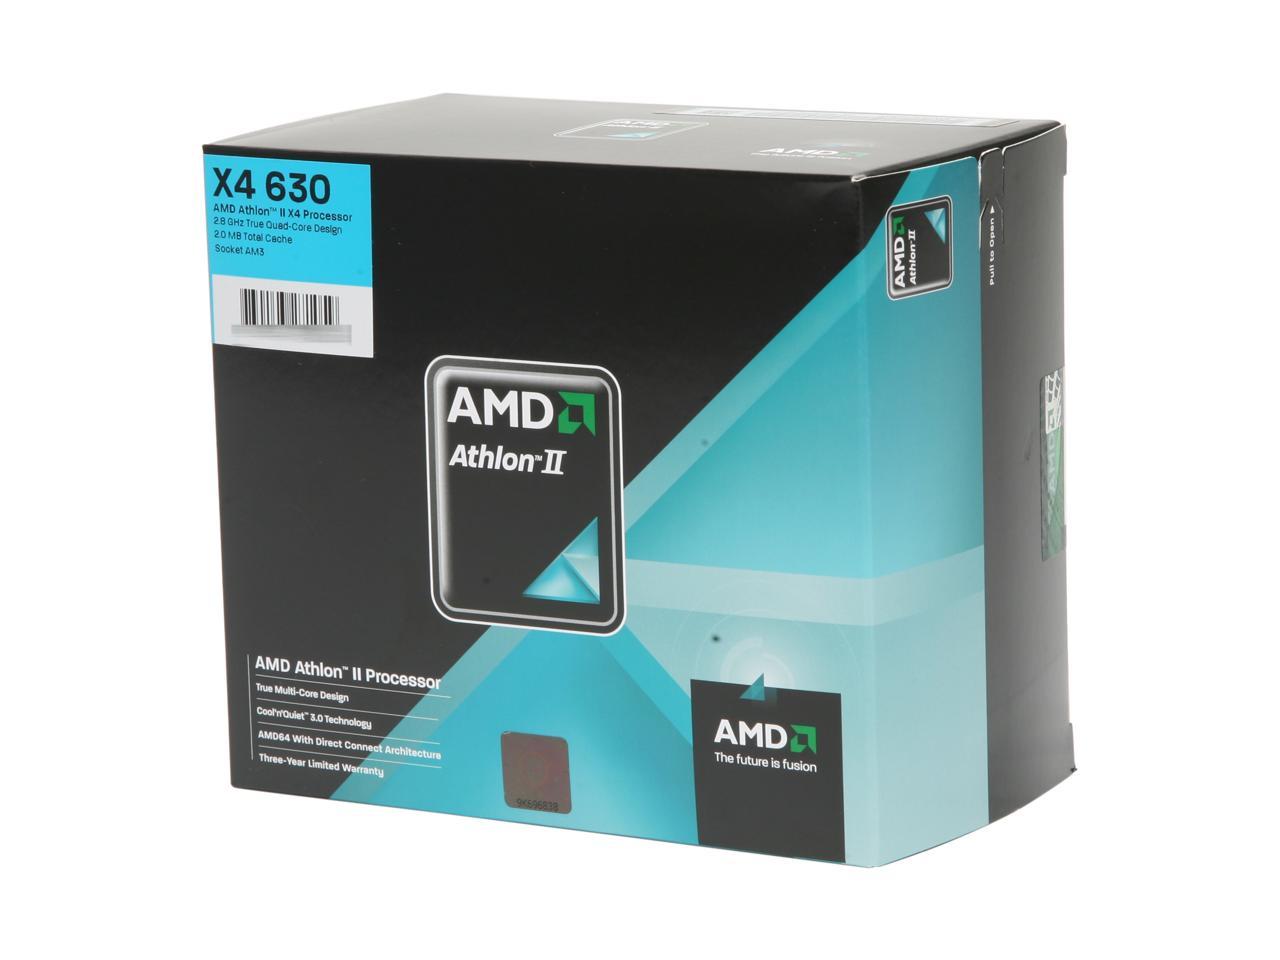 fictie Cataract Decoratie Used - Like New: AMD Athlon II X4 630 - Athlon II X4 Propus Quad-Core 2.8  GHz Socket AM3 95W Processor - ADX630WFGIBOX - Newegg.com